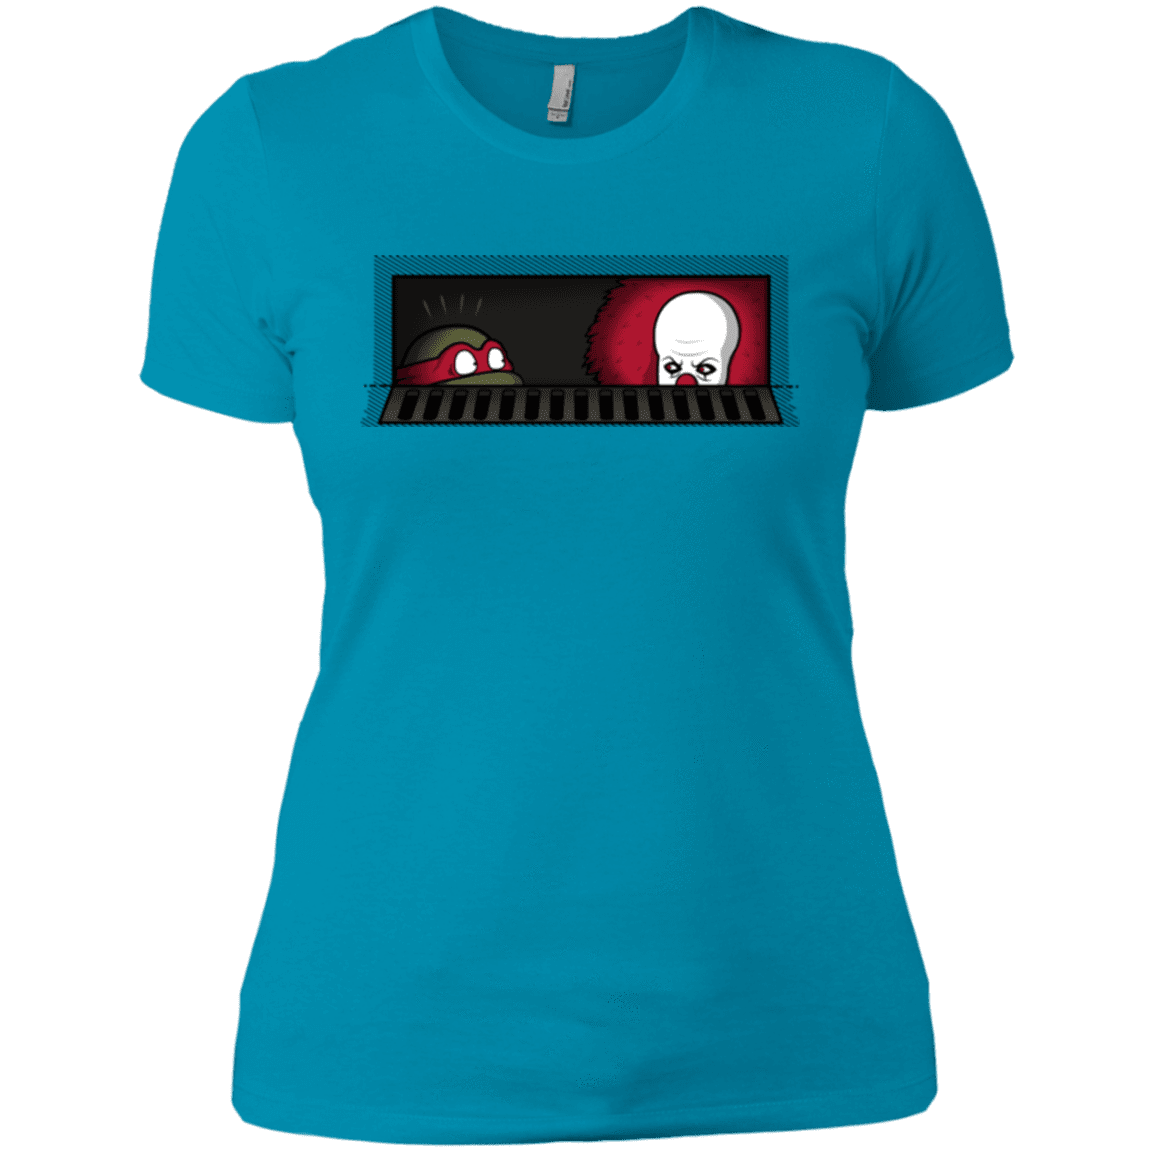 T-Shirts Turquoise / X-Small Sewermates Women's Premium T-Shirt